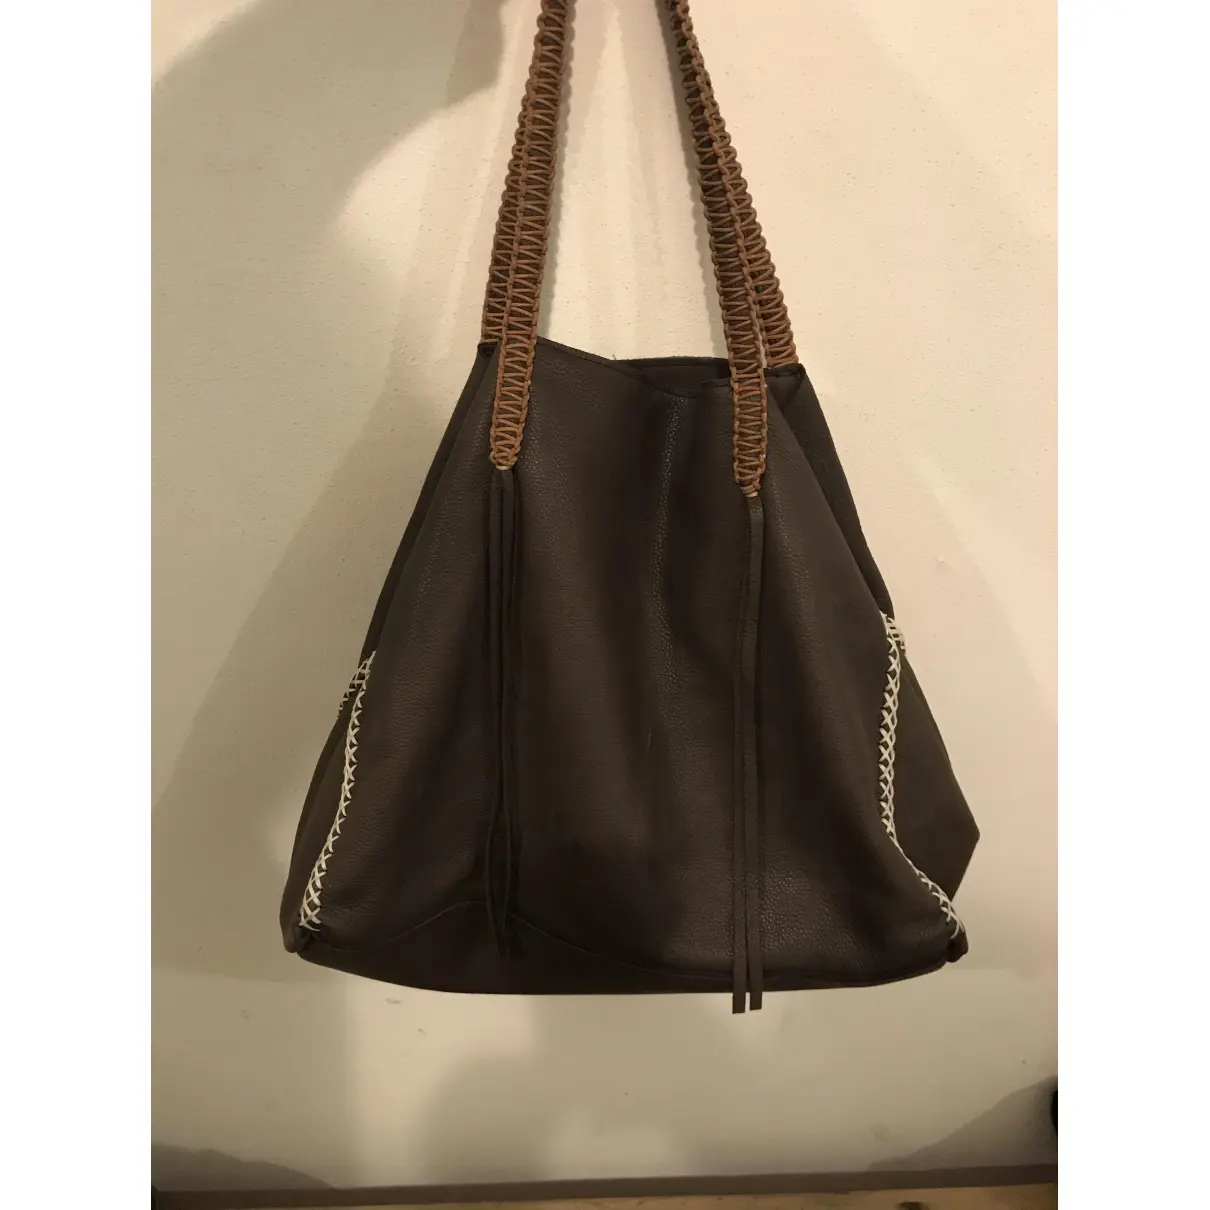 Buy Callista Crafts Leather handbag online